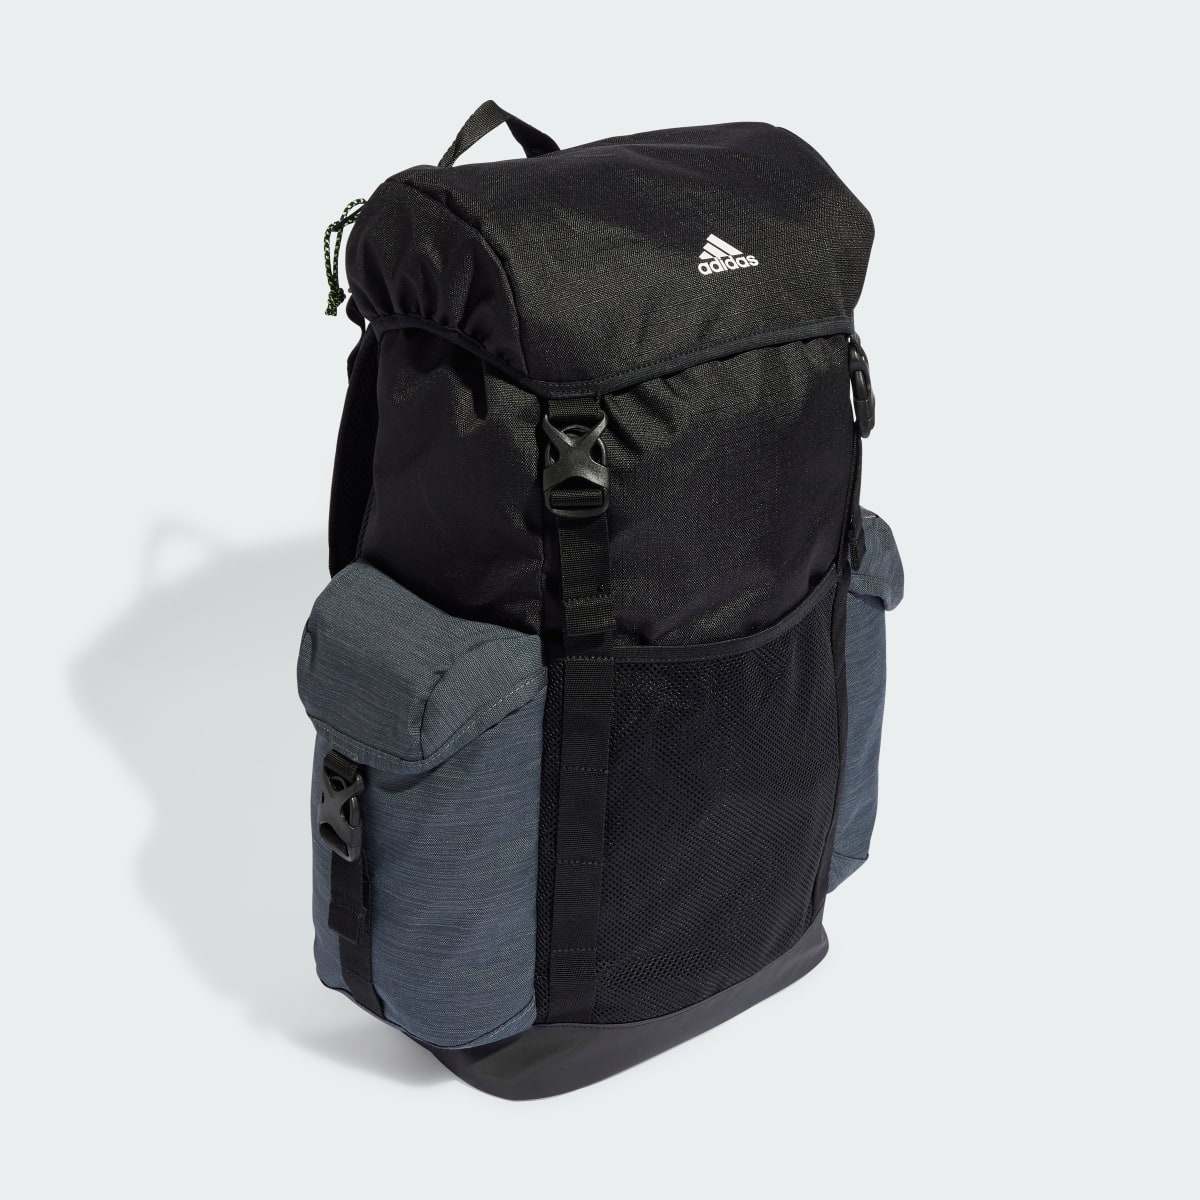 Adidas Xplorer Backpack. 4